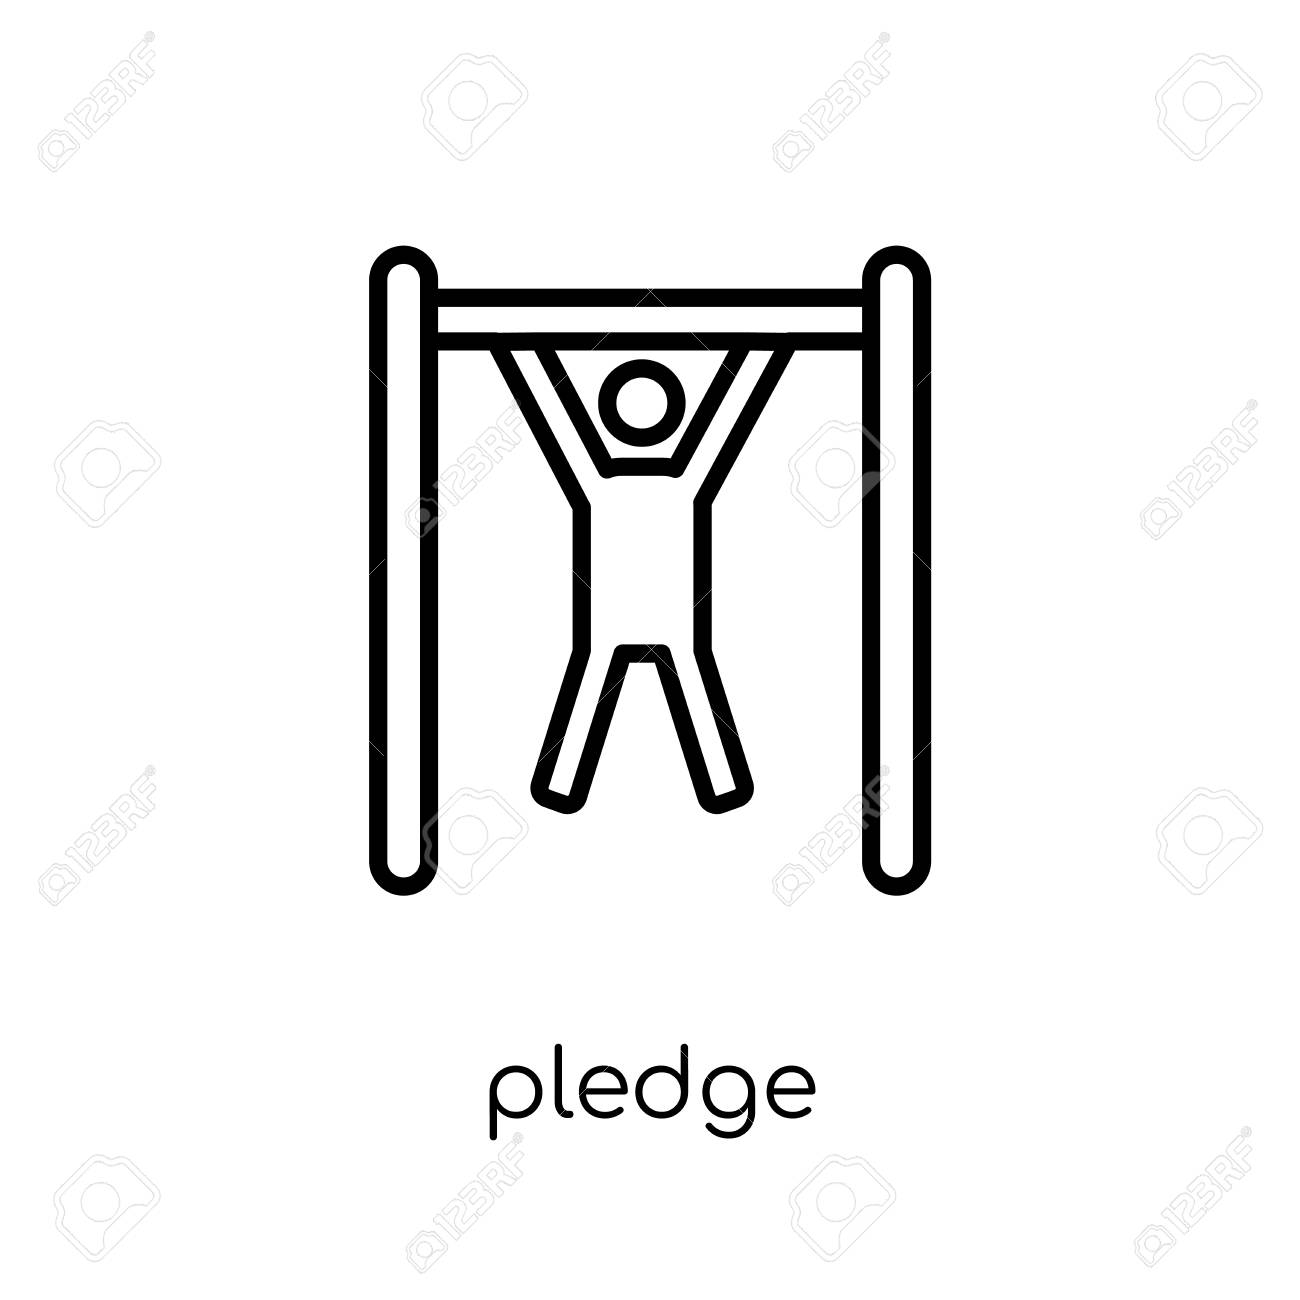 Pledge Icon Trendy Modern Flat Linear Vector On